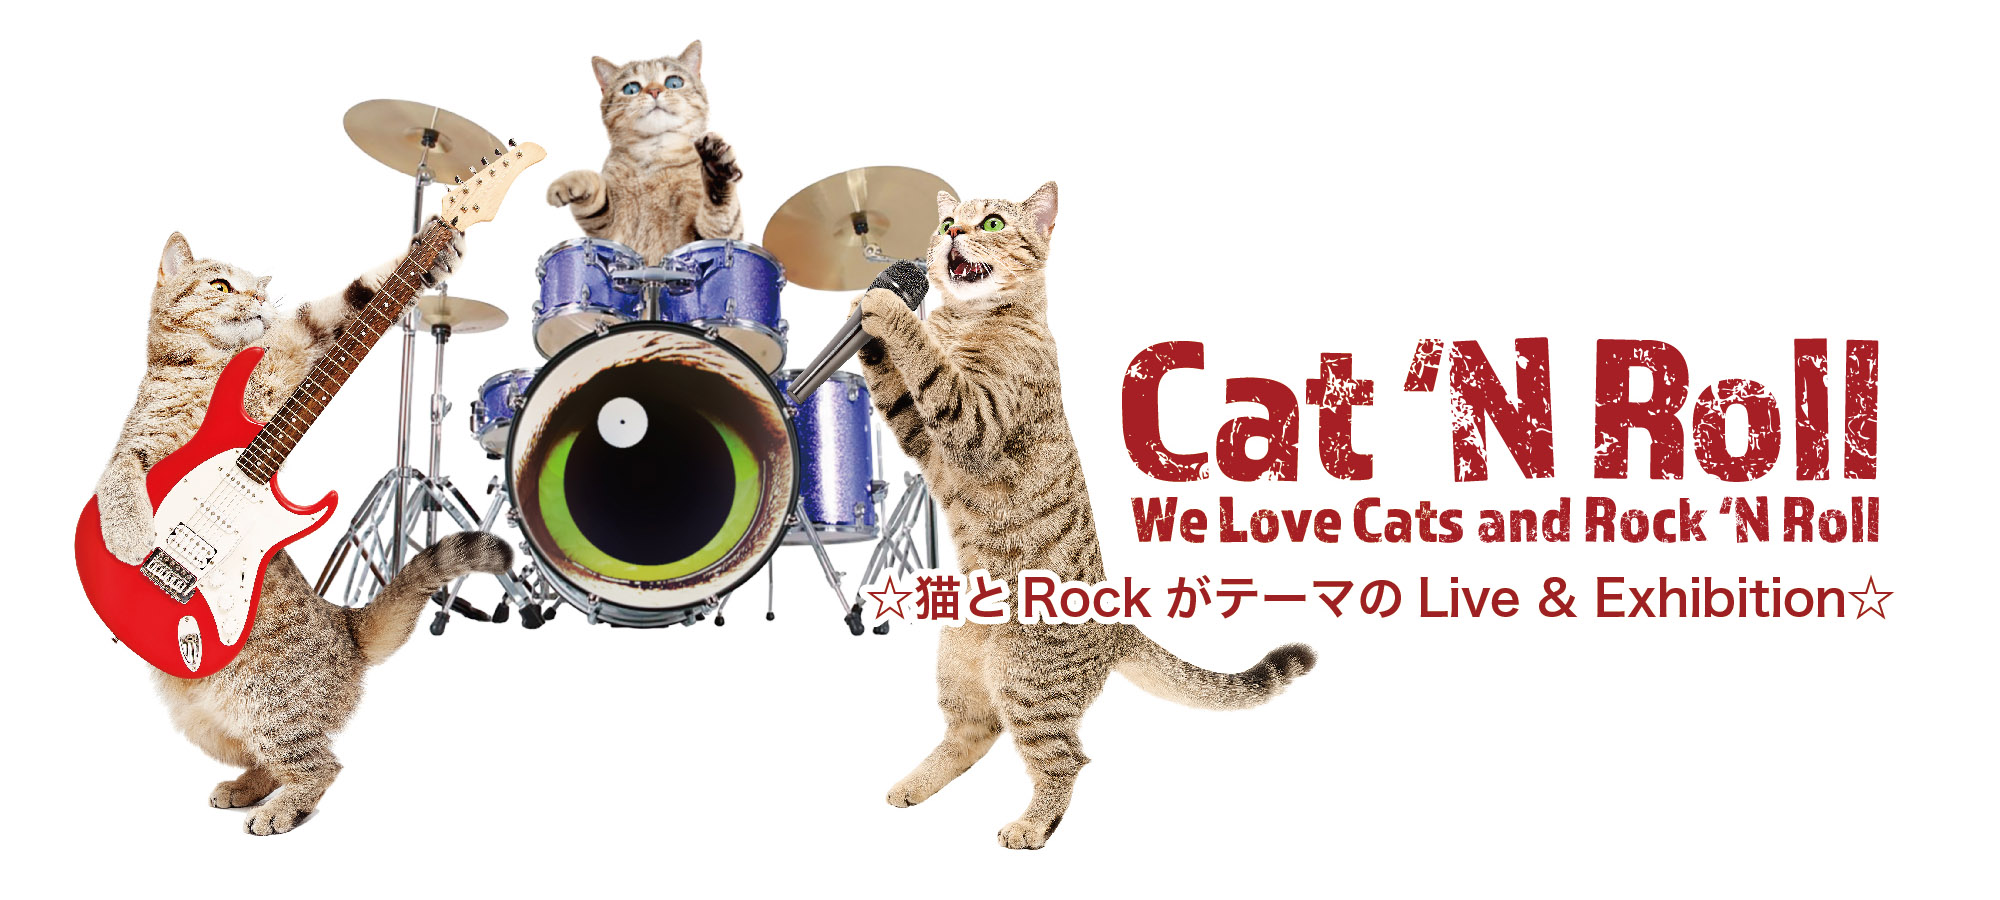 Cat 'N Roll ☆猫とROCKをテーマに Live & Exhibition を開催☆